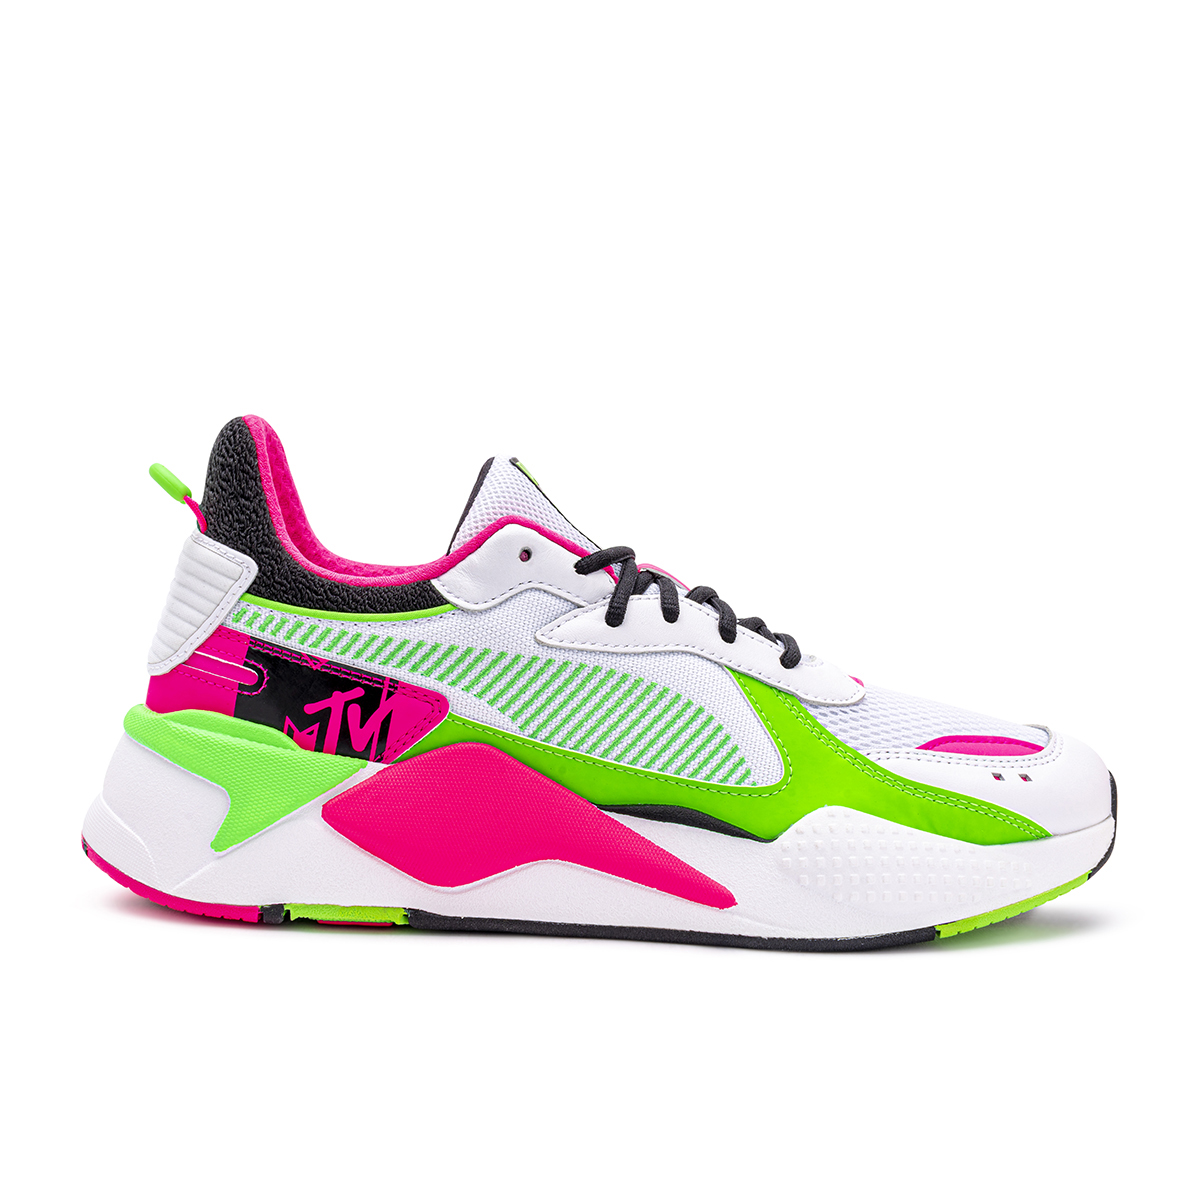 Puma RS-X TRACKS MTV BOLD - Men's Shoes online | Foot Locker UAE